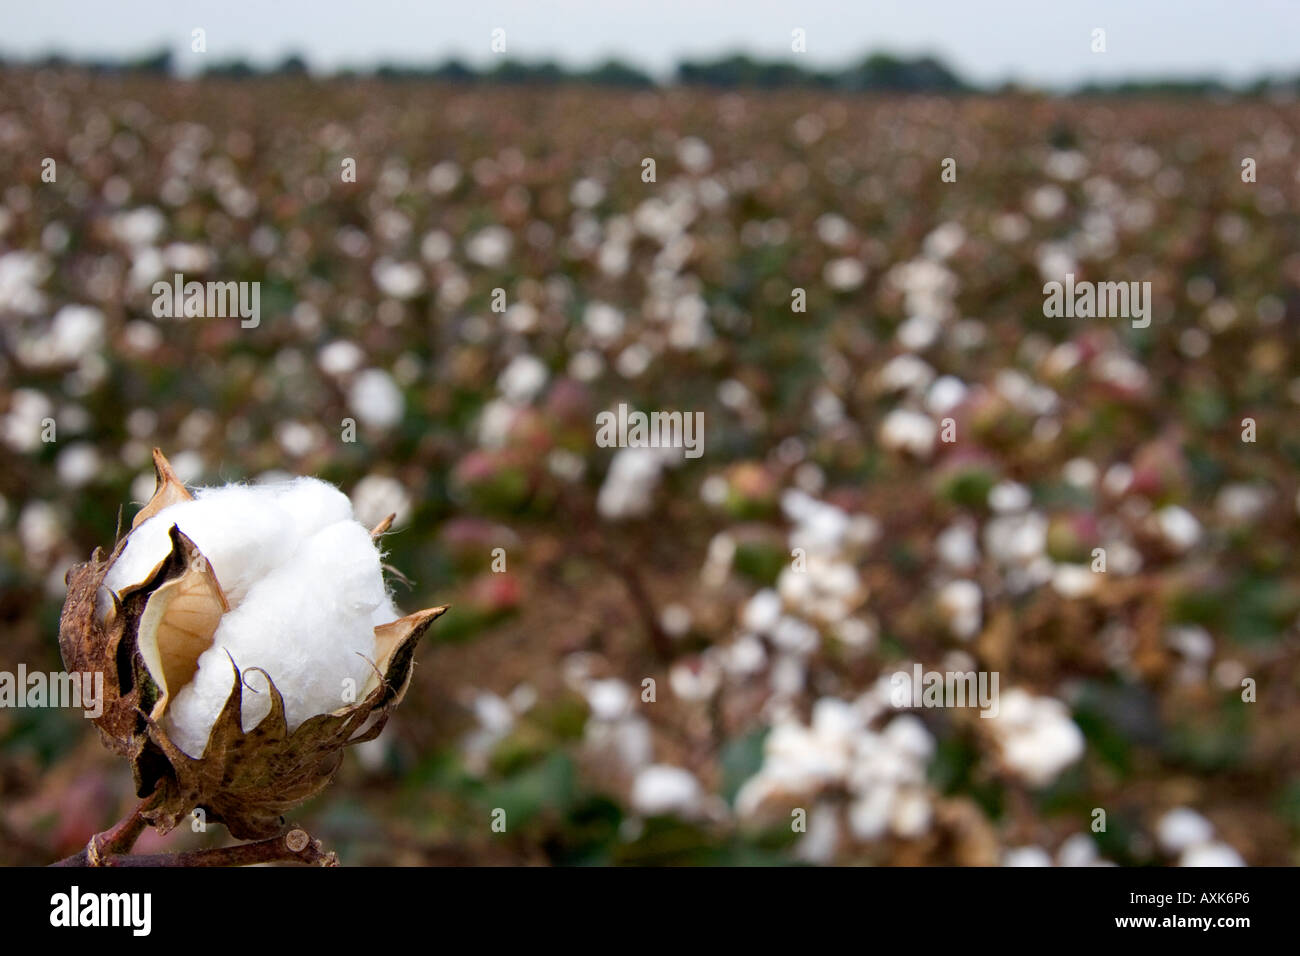 Cotton growing at New Madrid Missouri Stock Photo